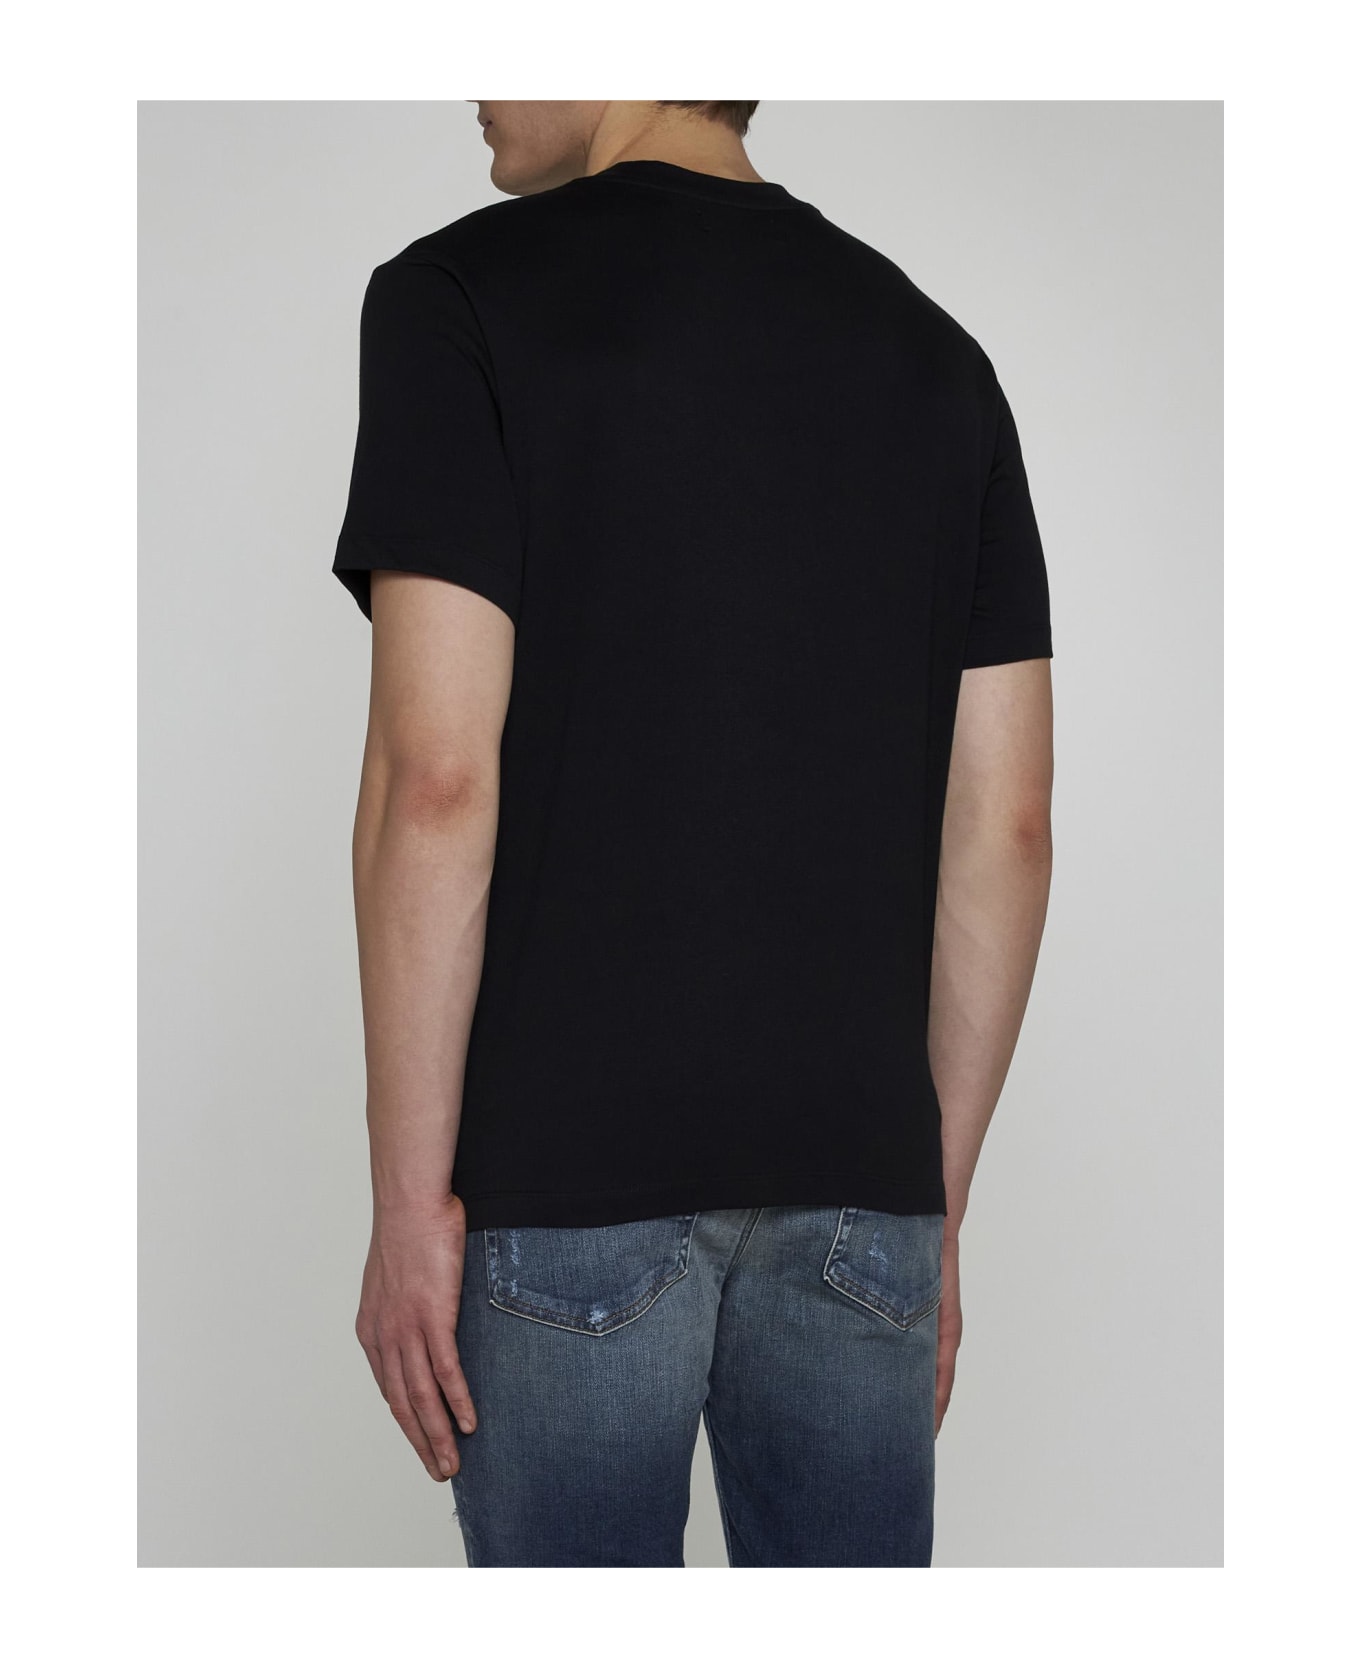 AMIRI Logo Cotton T-shirt - BLACK シャツ